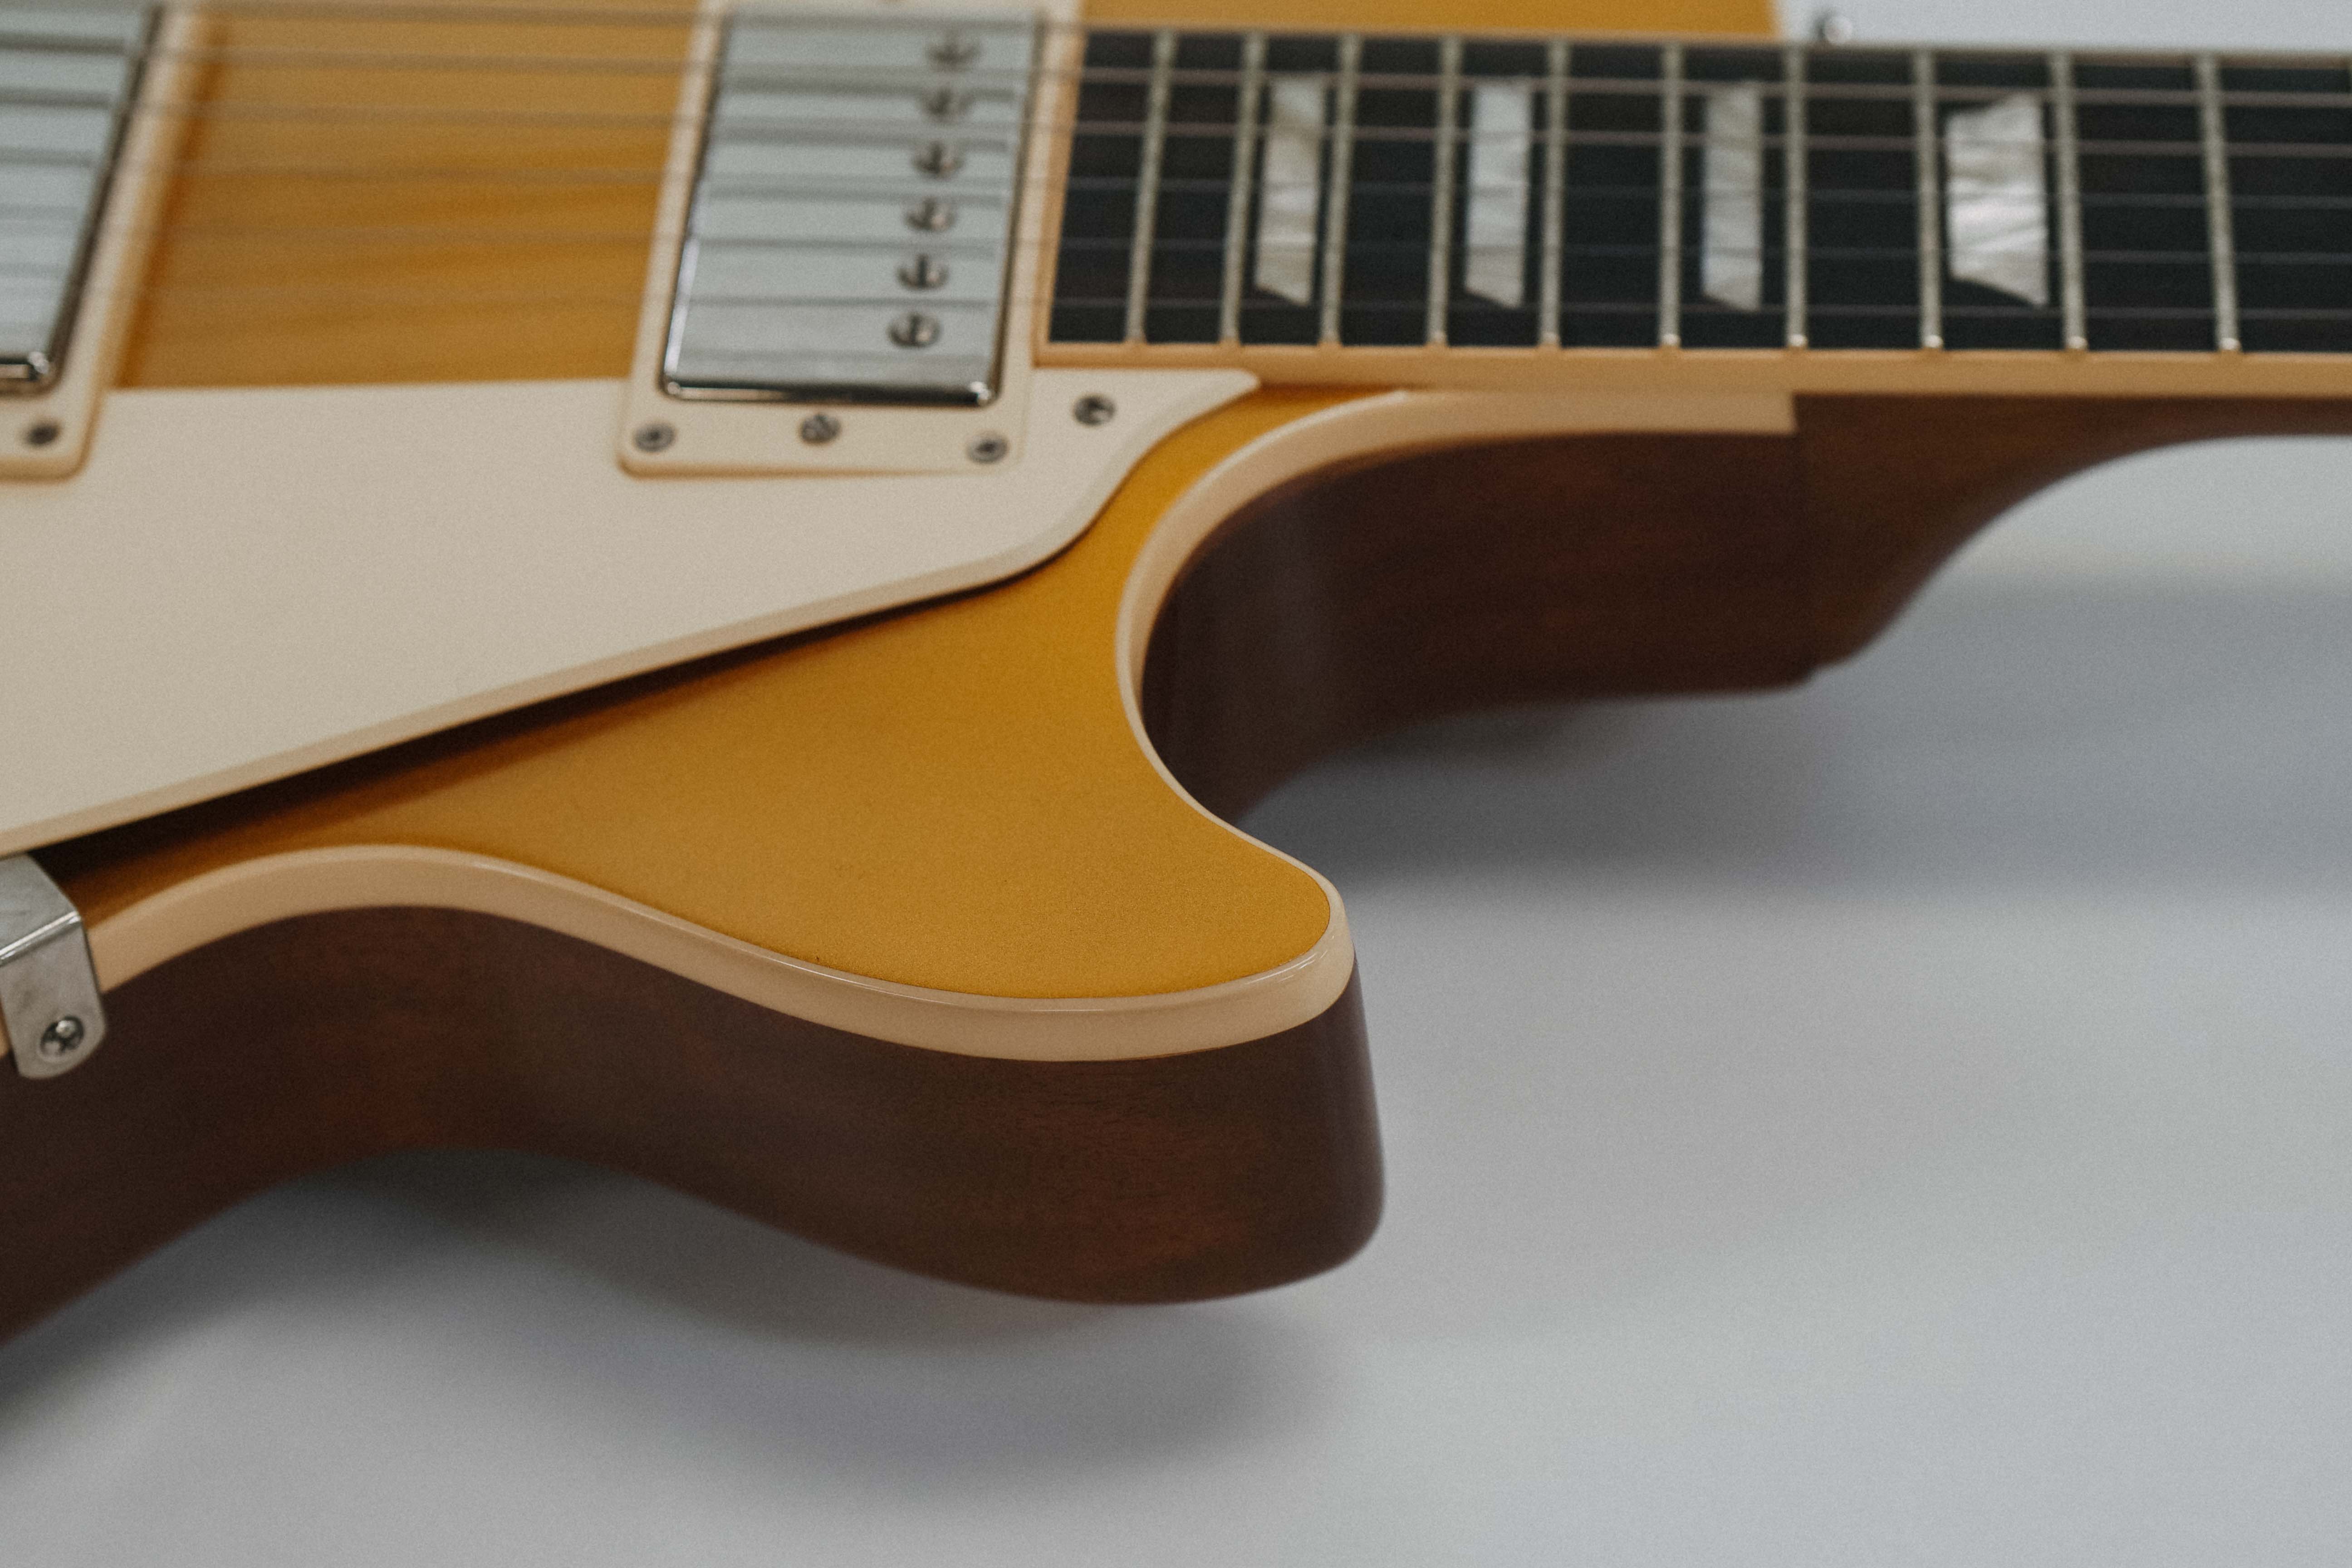 Gibson 2019 Les Paul Standard 50's Goldtop Electric Guitar